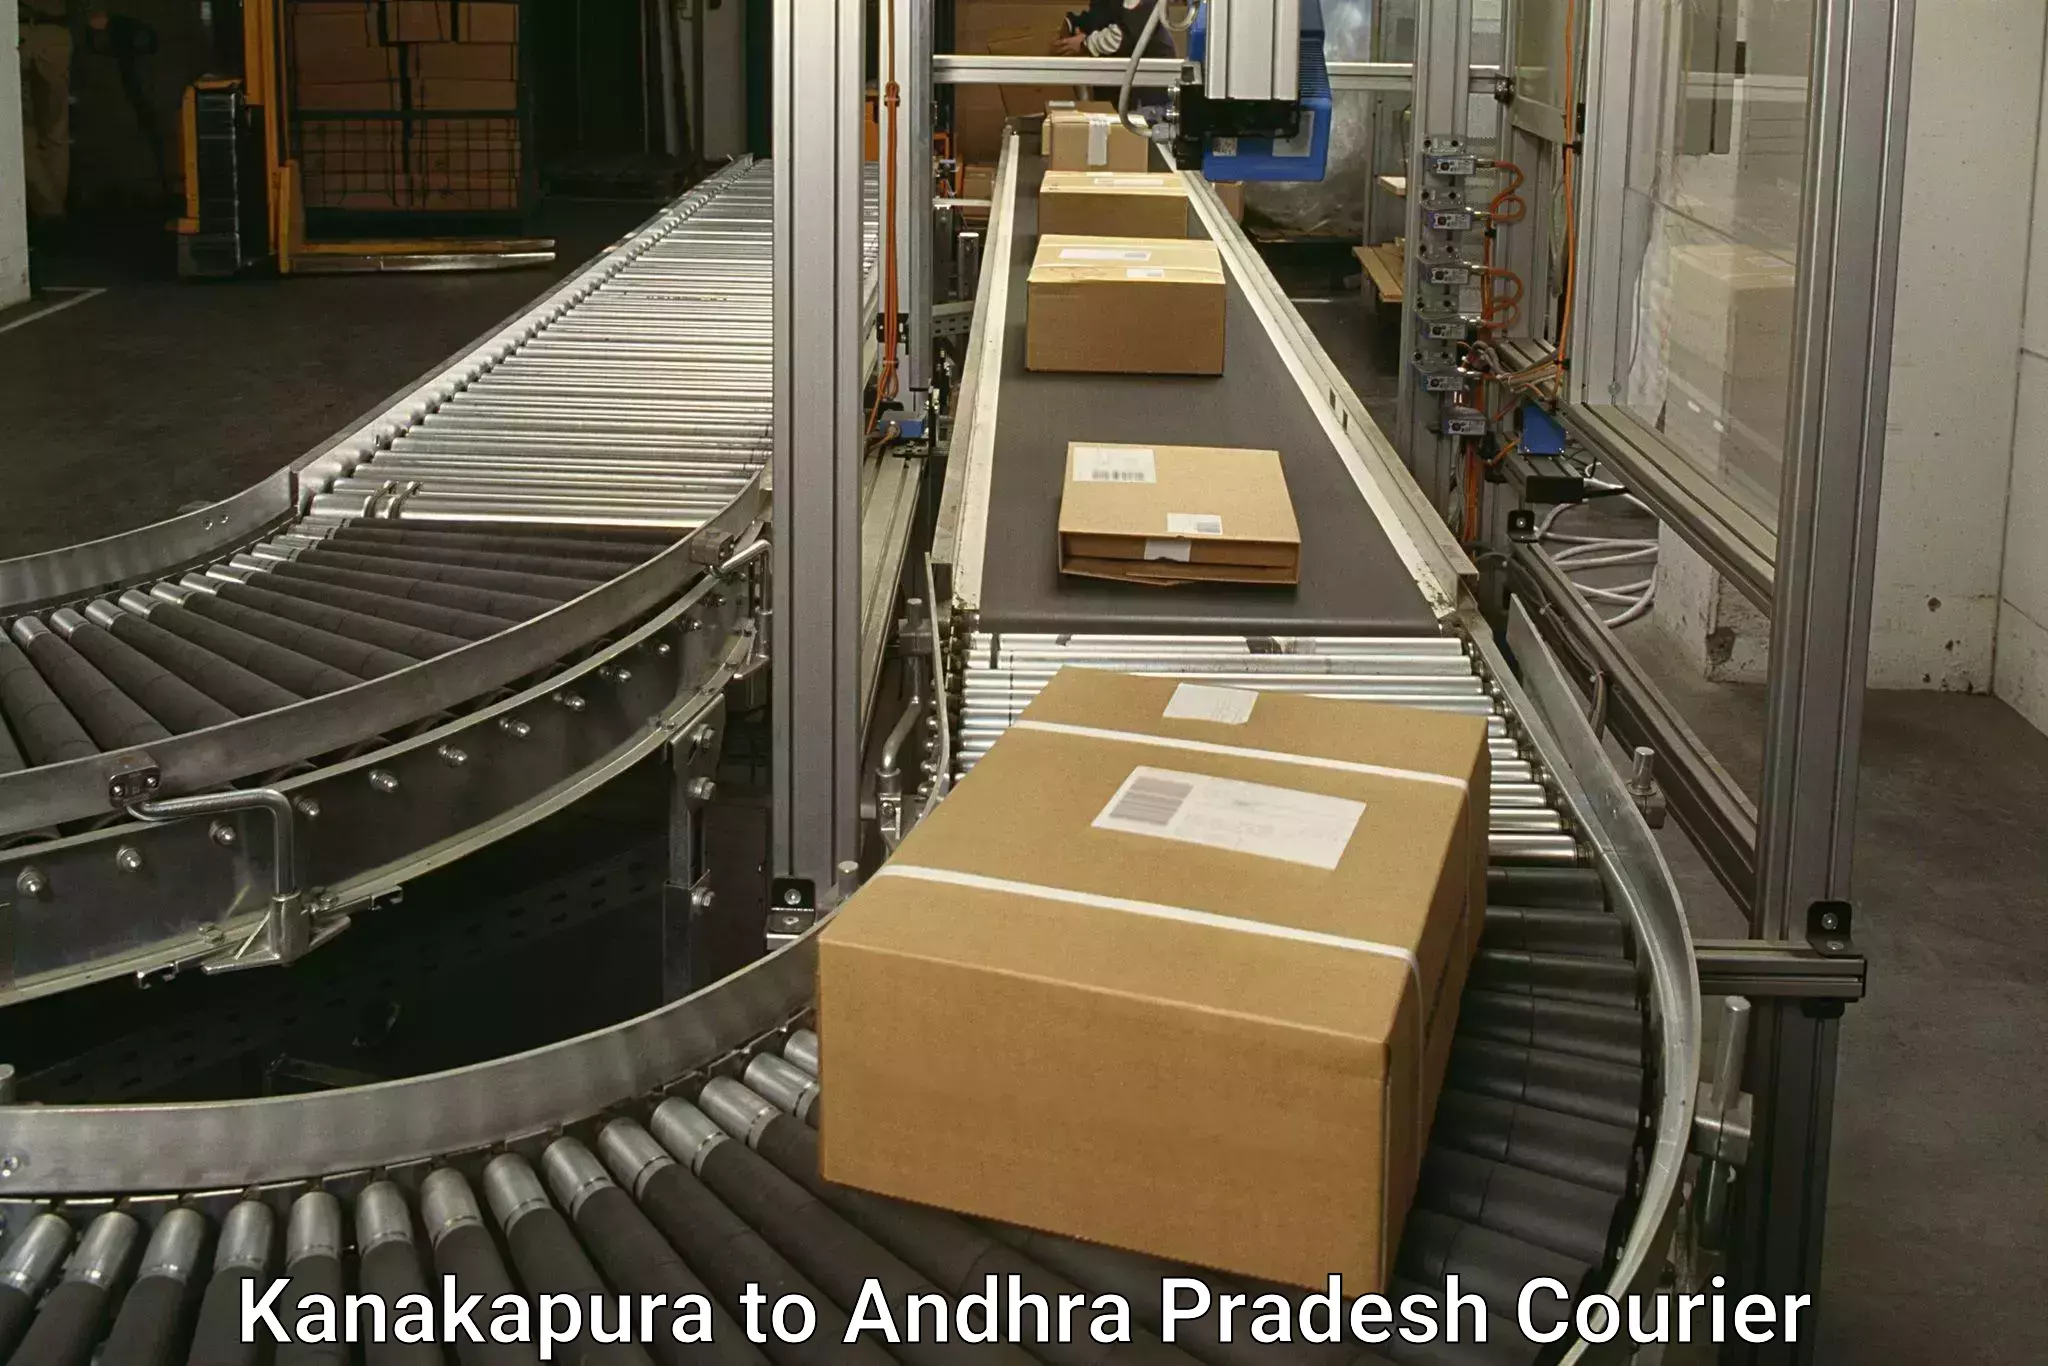 Secure freight services Kanakapura to Visakhapatnam Port